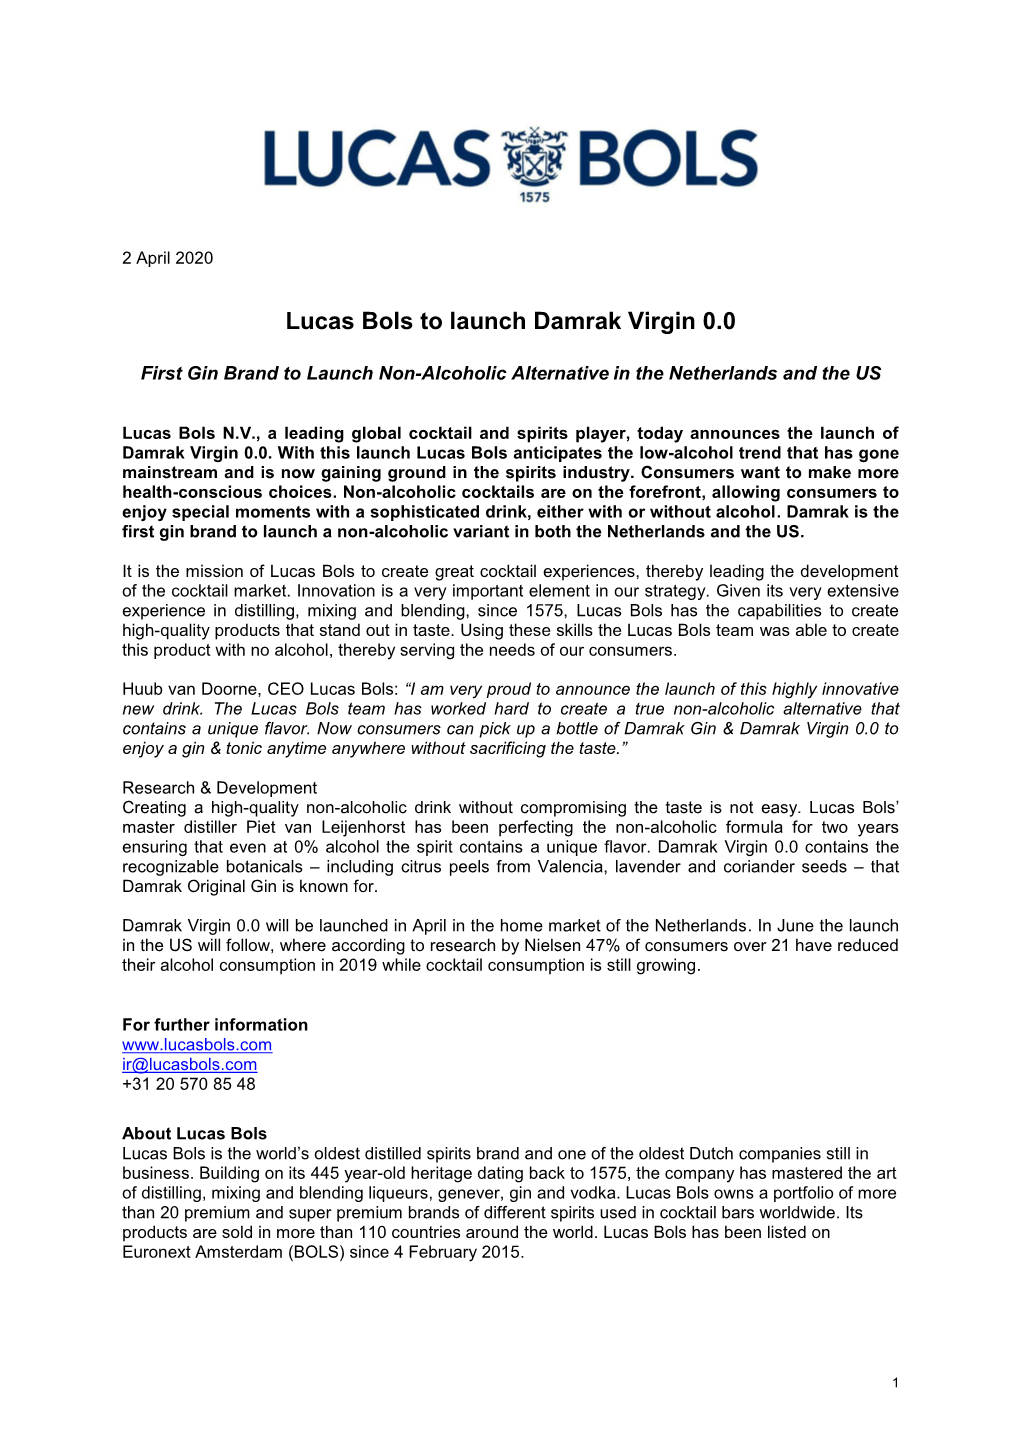 Lucas Bols to Launch Damrak Virgin 0.0